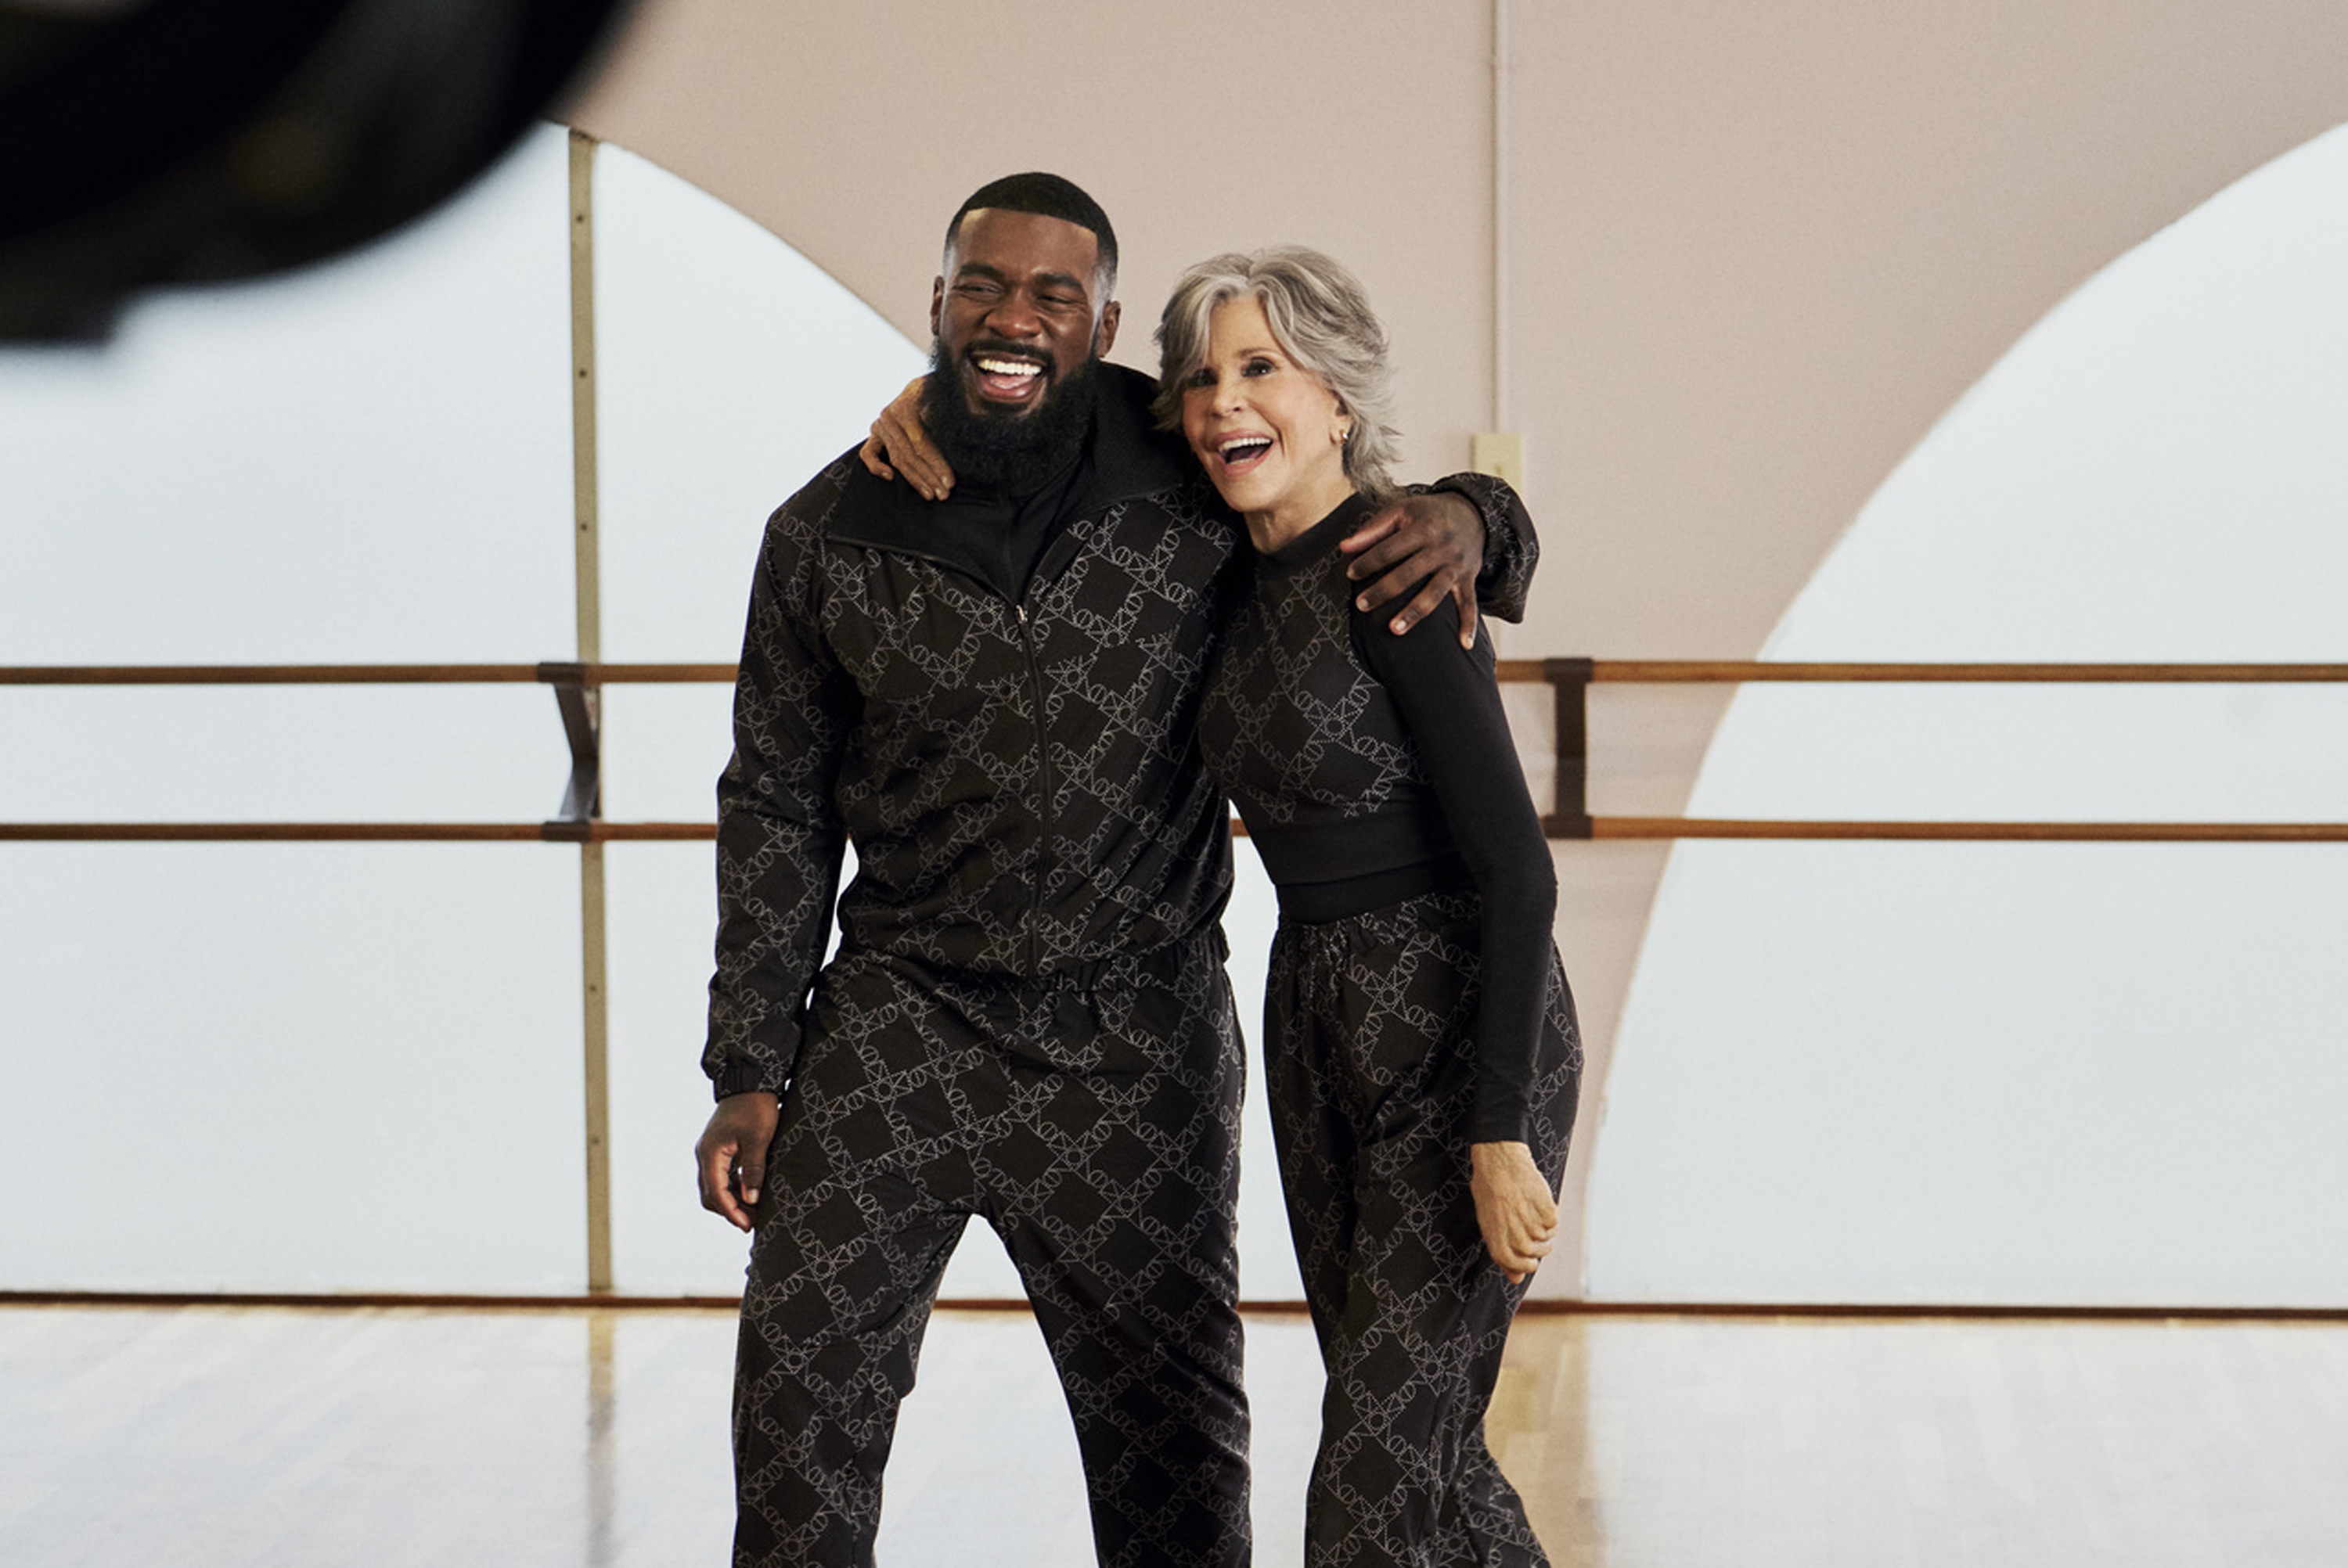 JaQuel Knight and Jane Fonda in the H&M Move campaign video